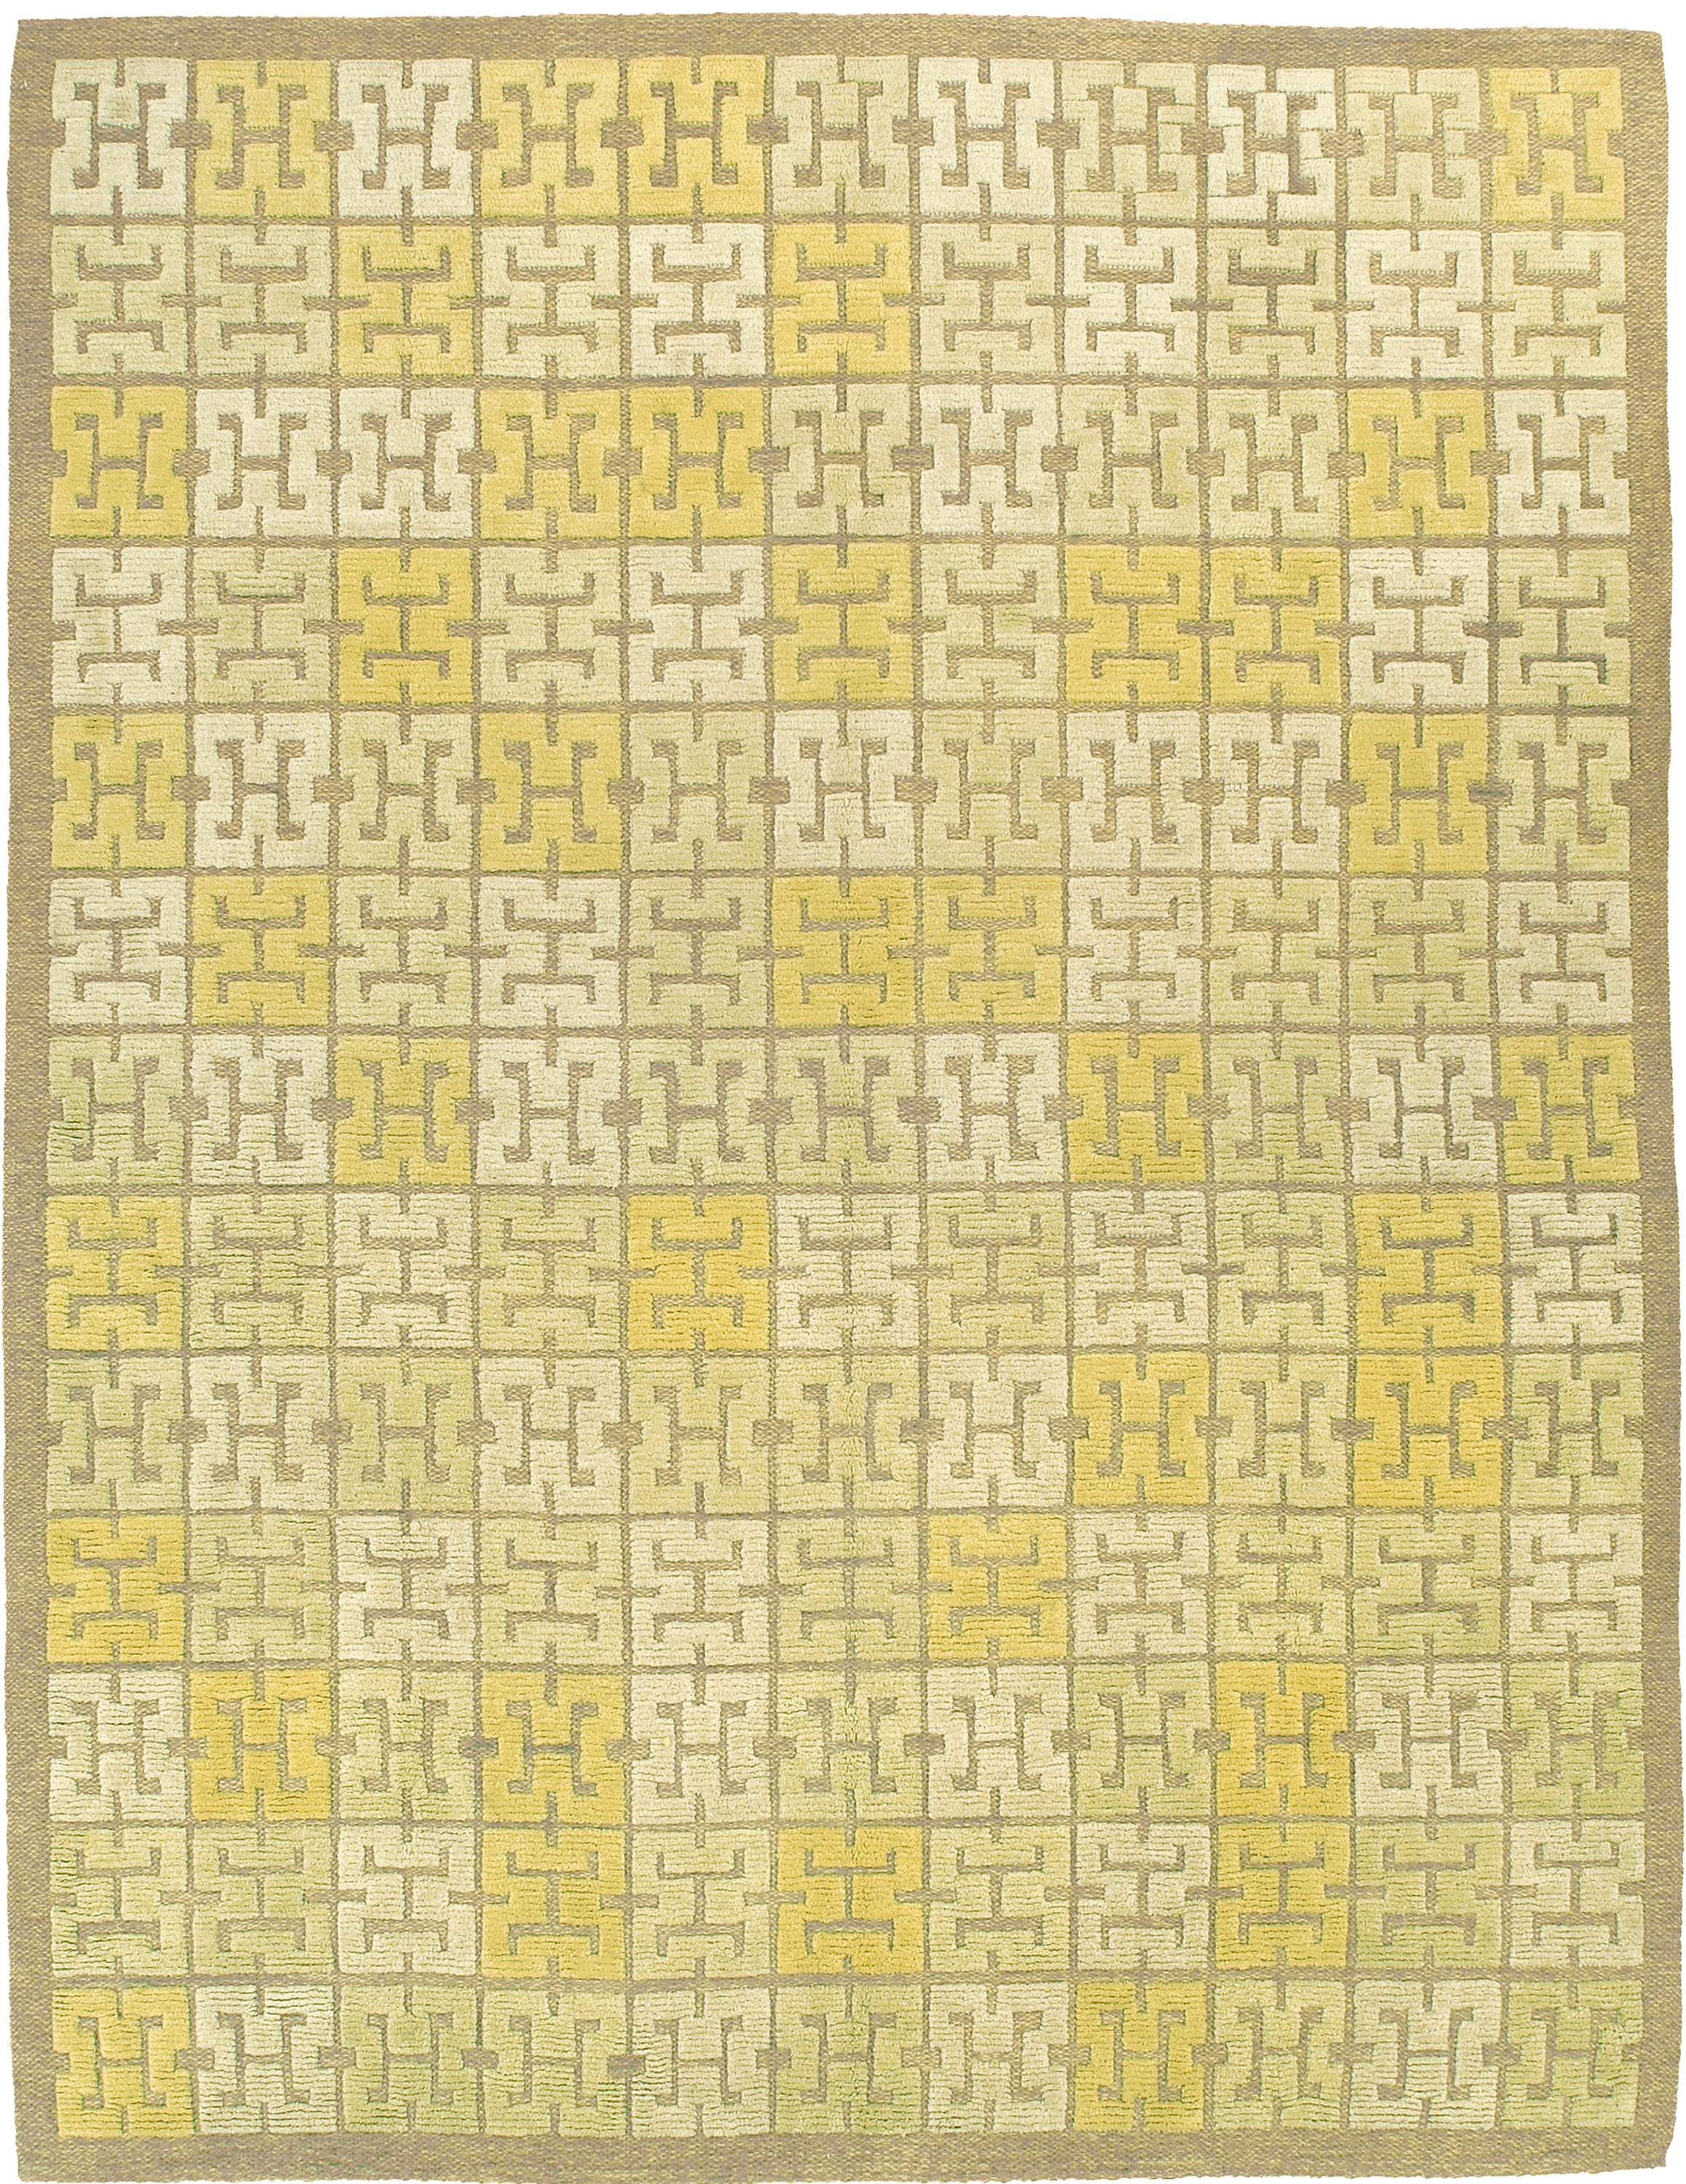 16952 Hector Design | Custom Swedish Inspired Design Carpet | FJ Hakimian | Carpet Gallery in NYC